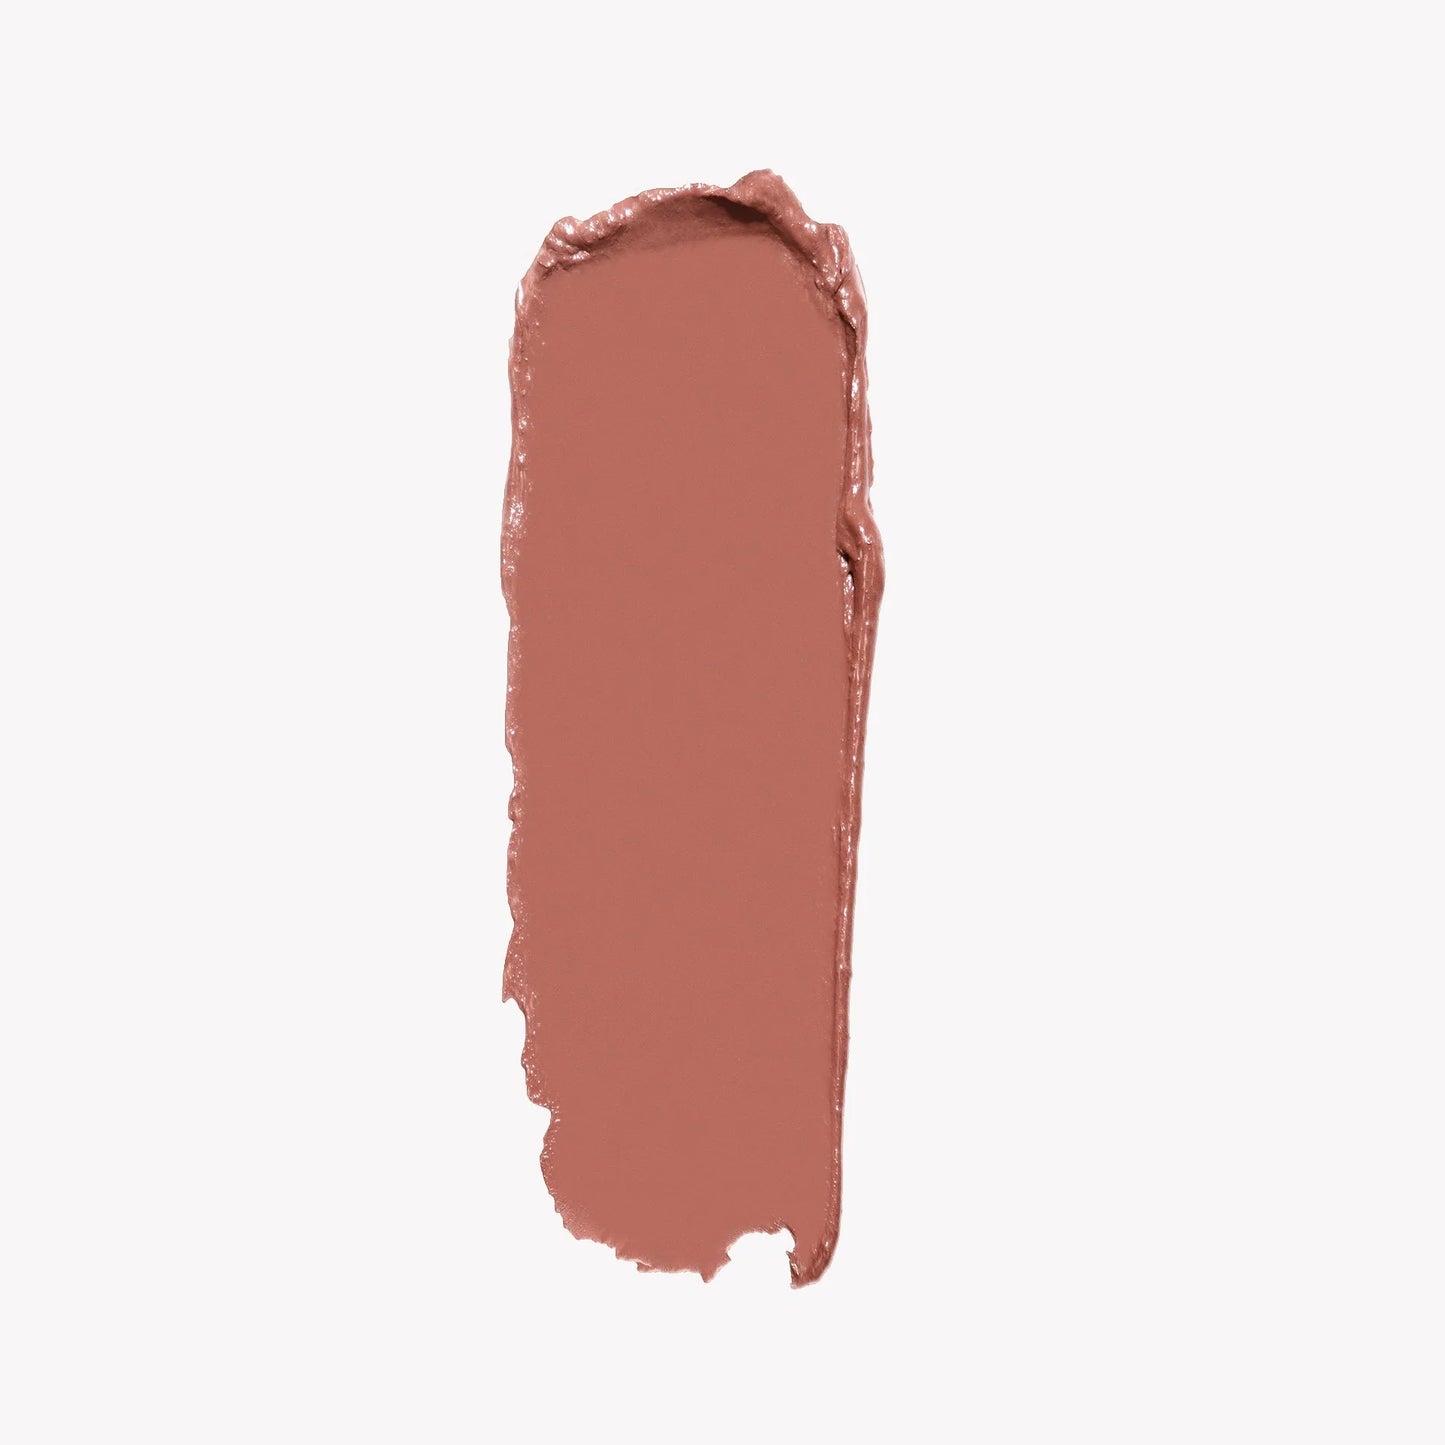 Dose of Colors Liquid Matte Lipstick- Nude Mood 4.5g